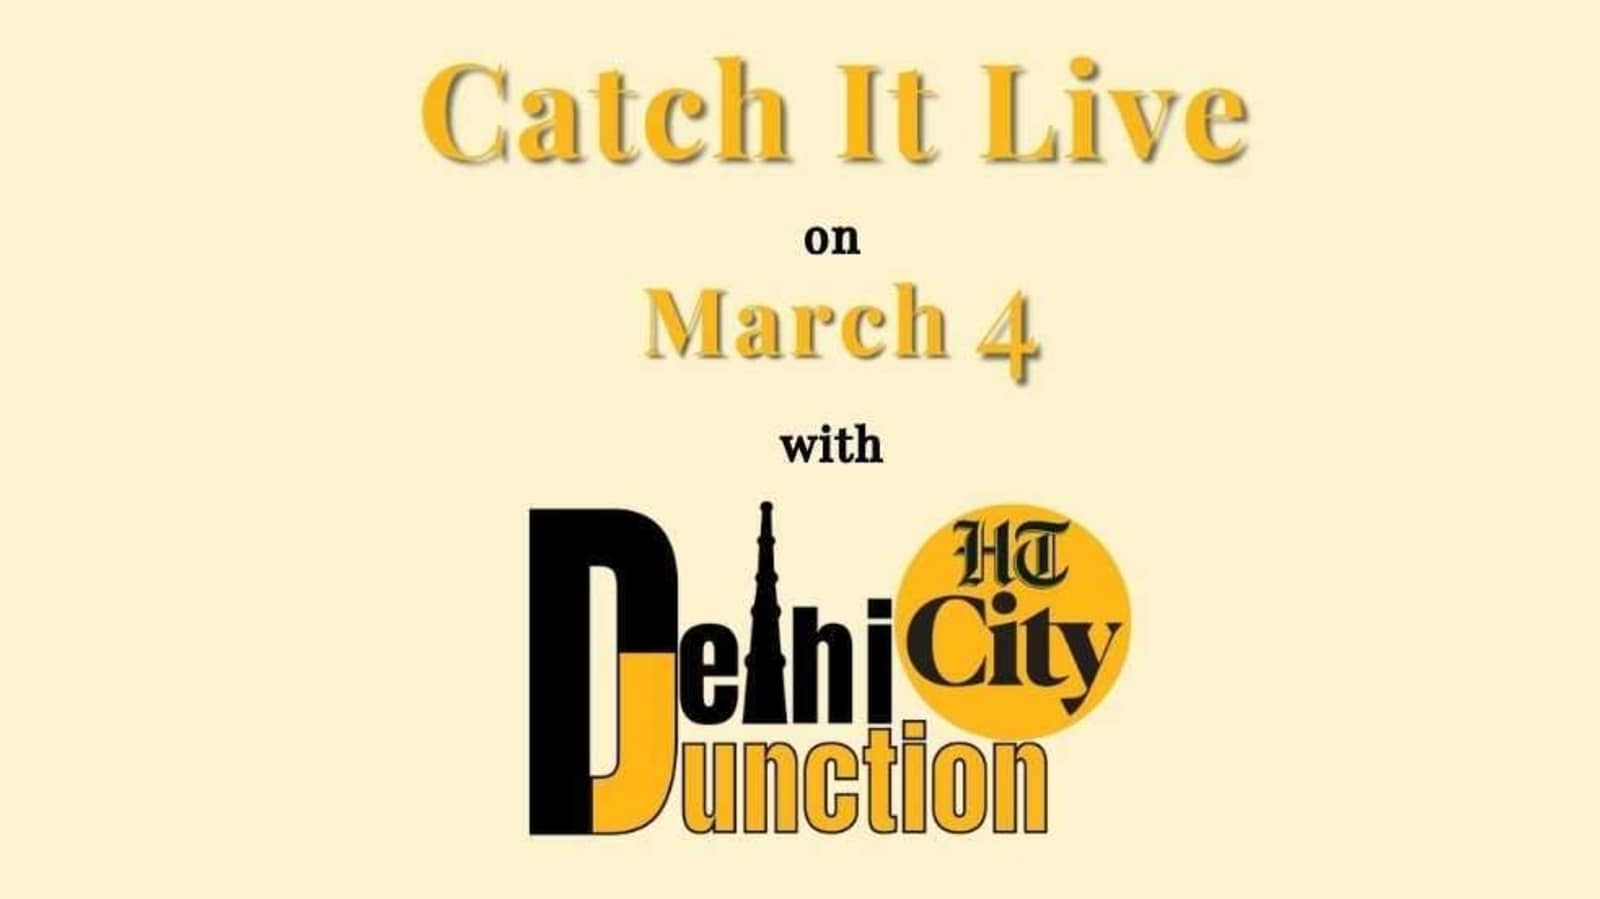 HT City Delhi Junction: Catch It Live on March 4